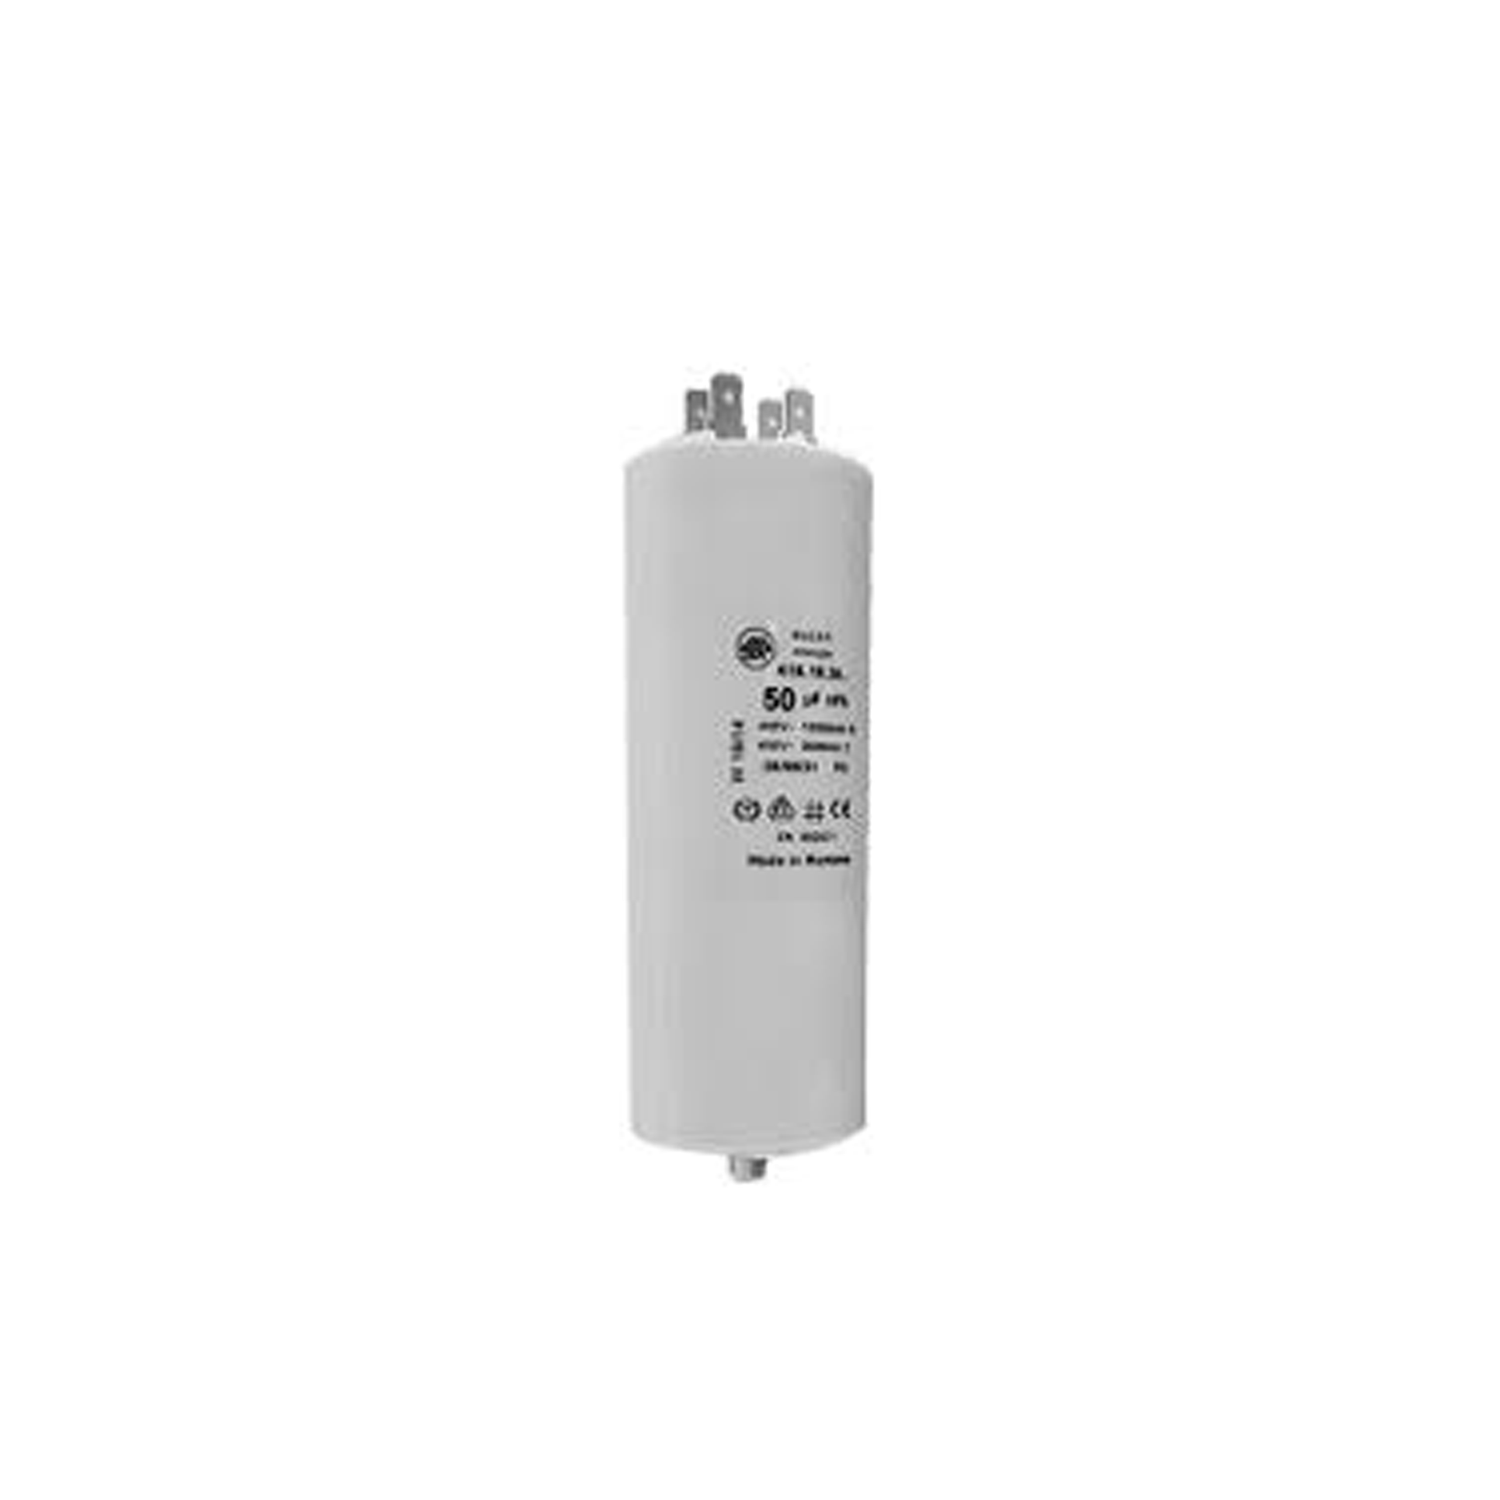 Service capacitor 25/450S10FD for compressor 18-PA108M1C-4DZDE2